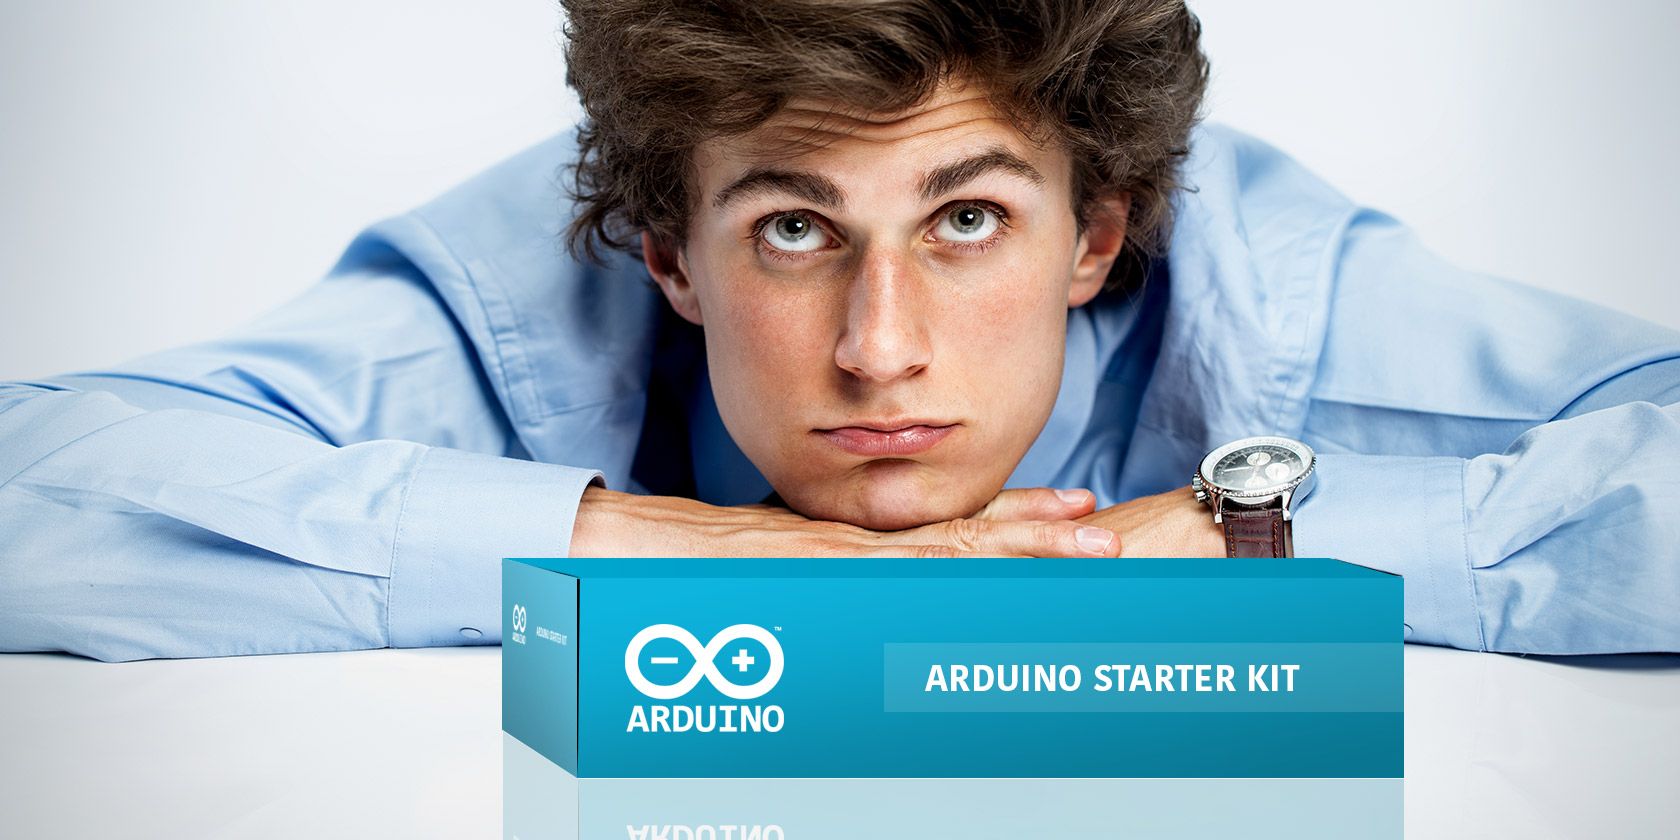 Man with Arduino starter kit